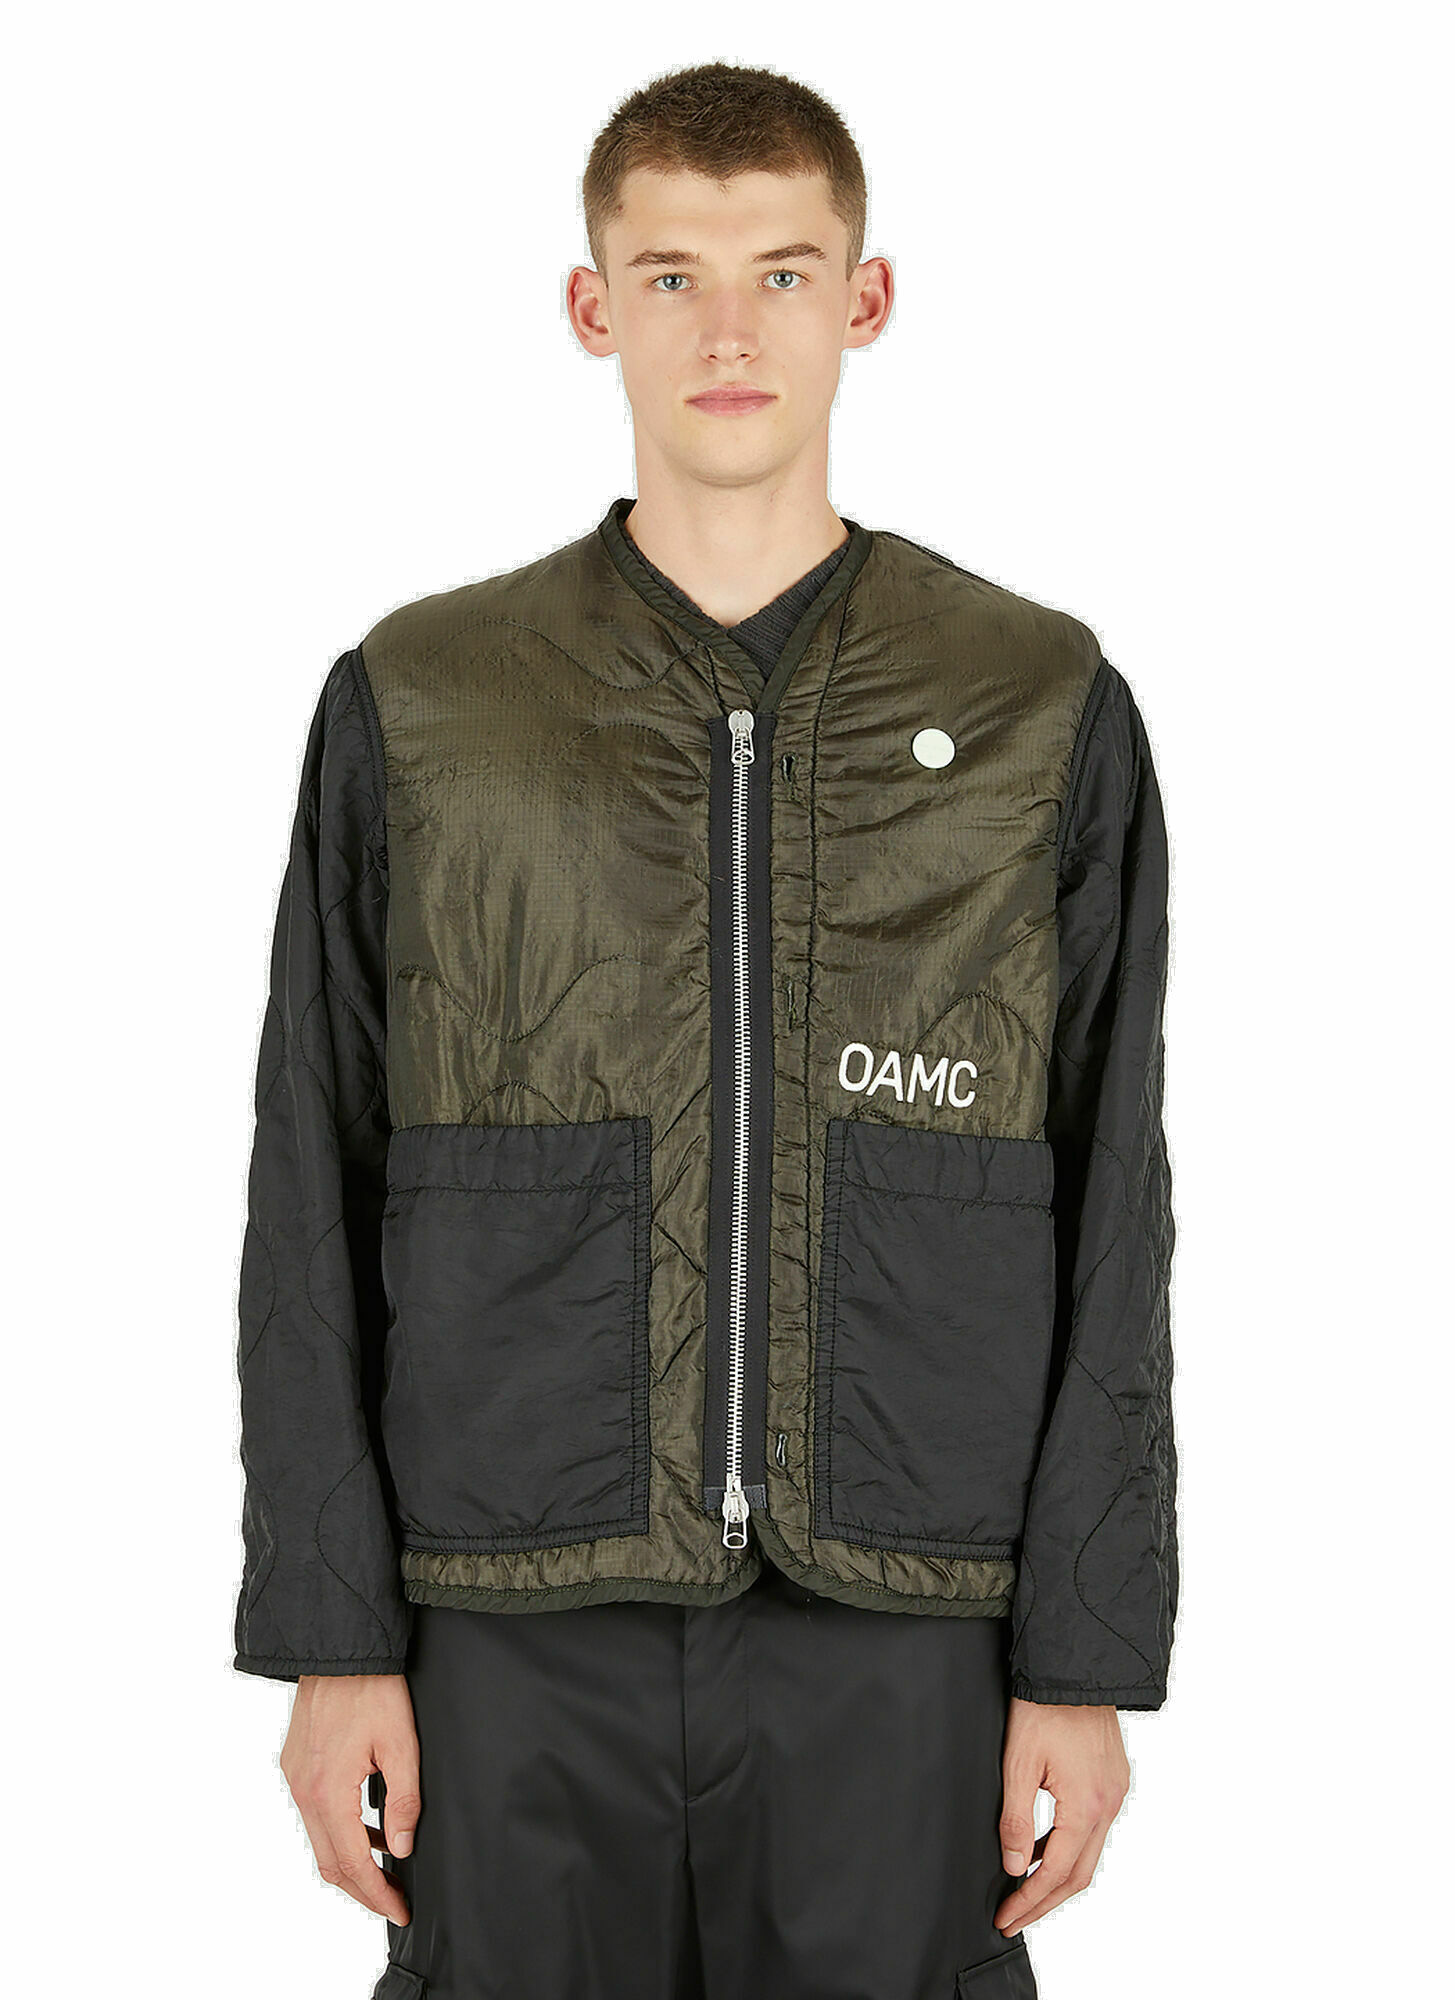 OAMC RE-WORK - Peacemaker Zip Jacket in Black OAMC RE-WORK